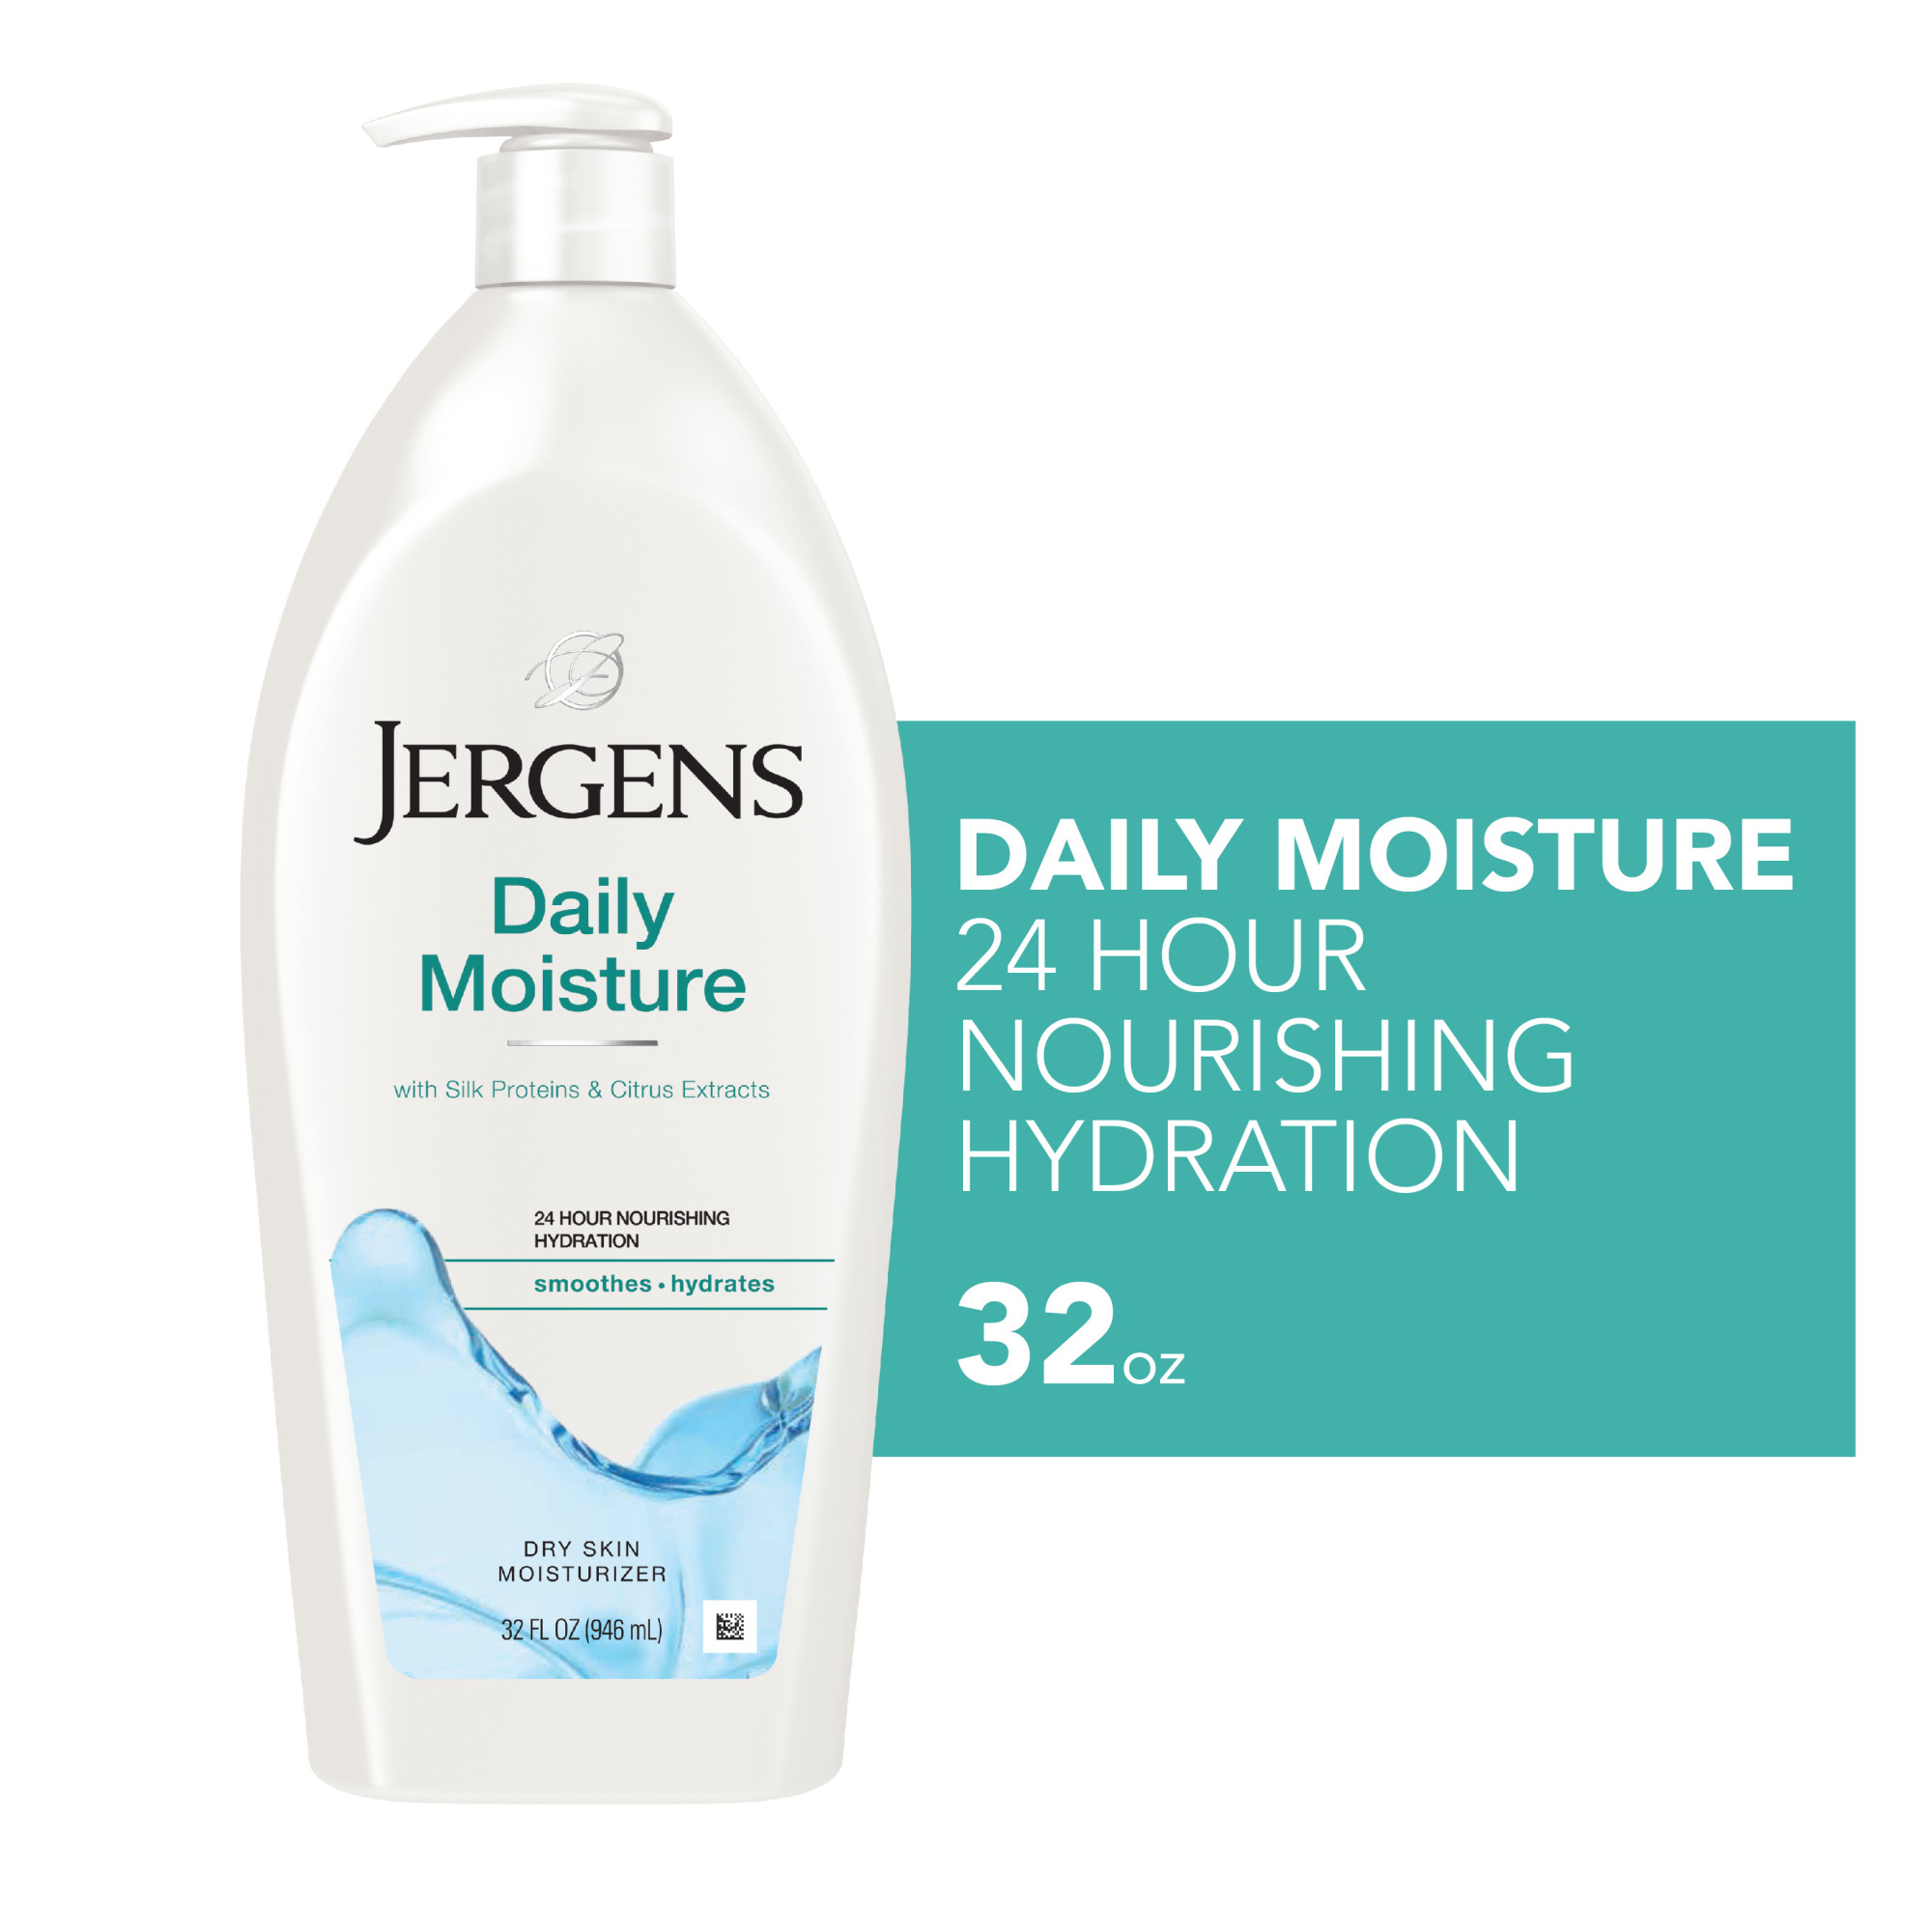 Jergens Daily Moisture Dry Skin Moisturizing Body Lotion, 32 fl oz - image 1 of 17